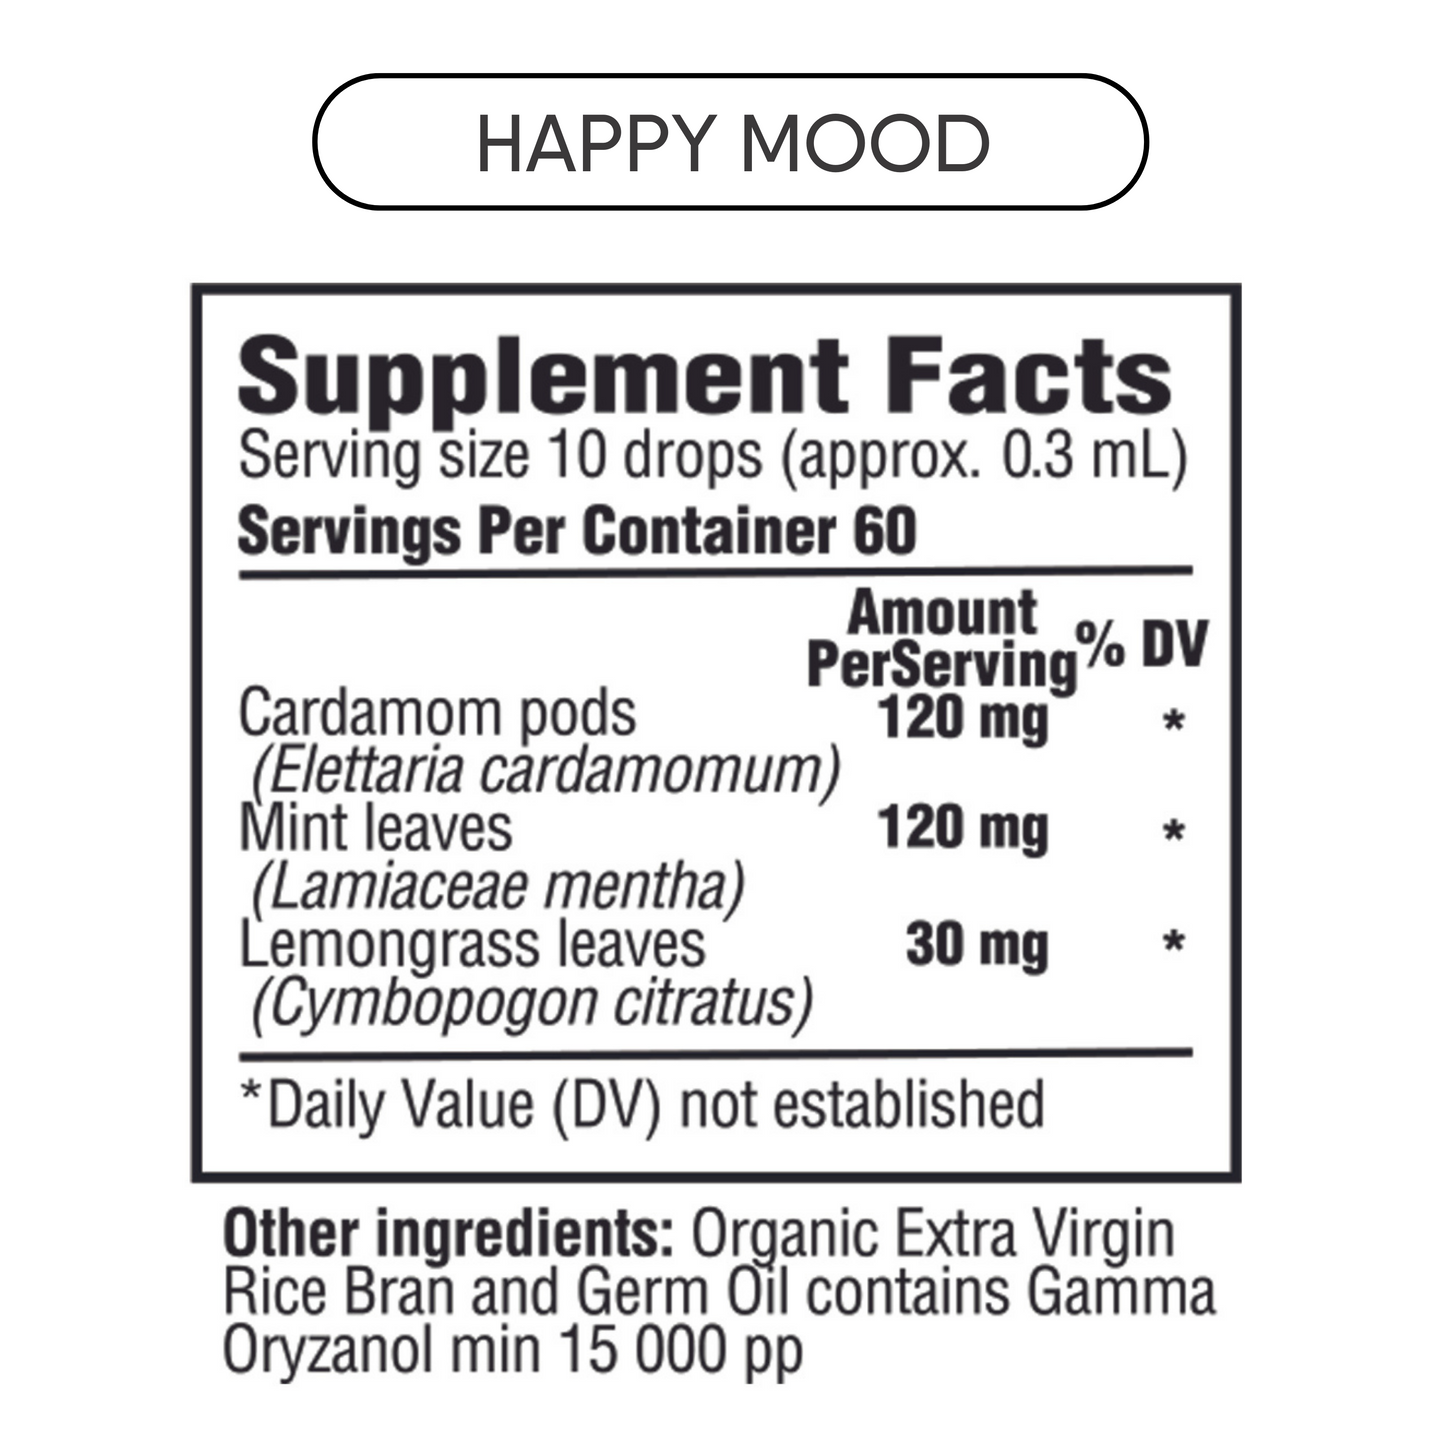 Happy Mood Supplement